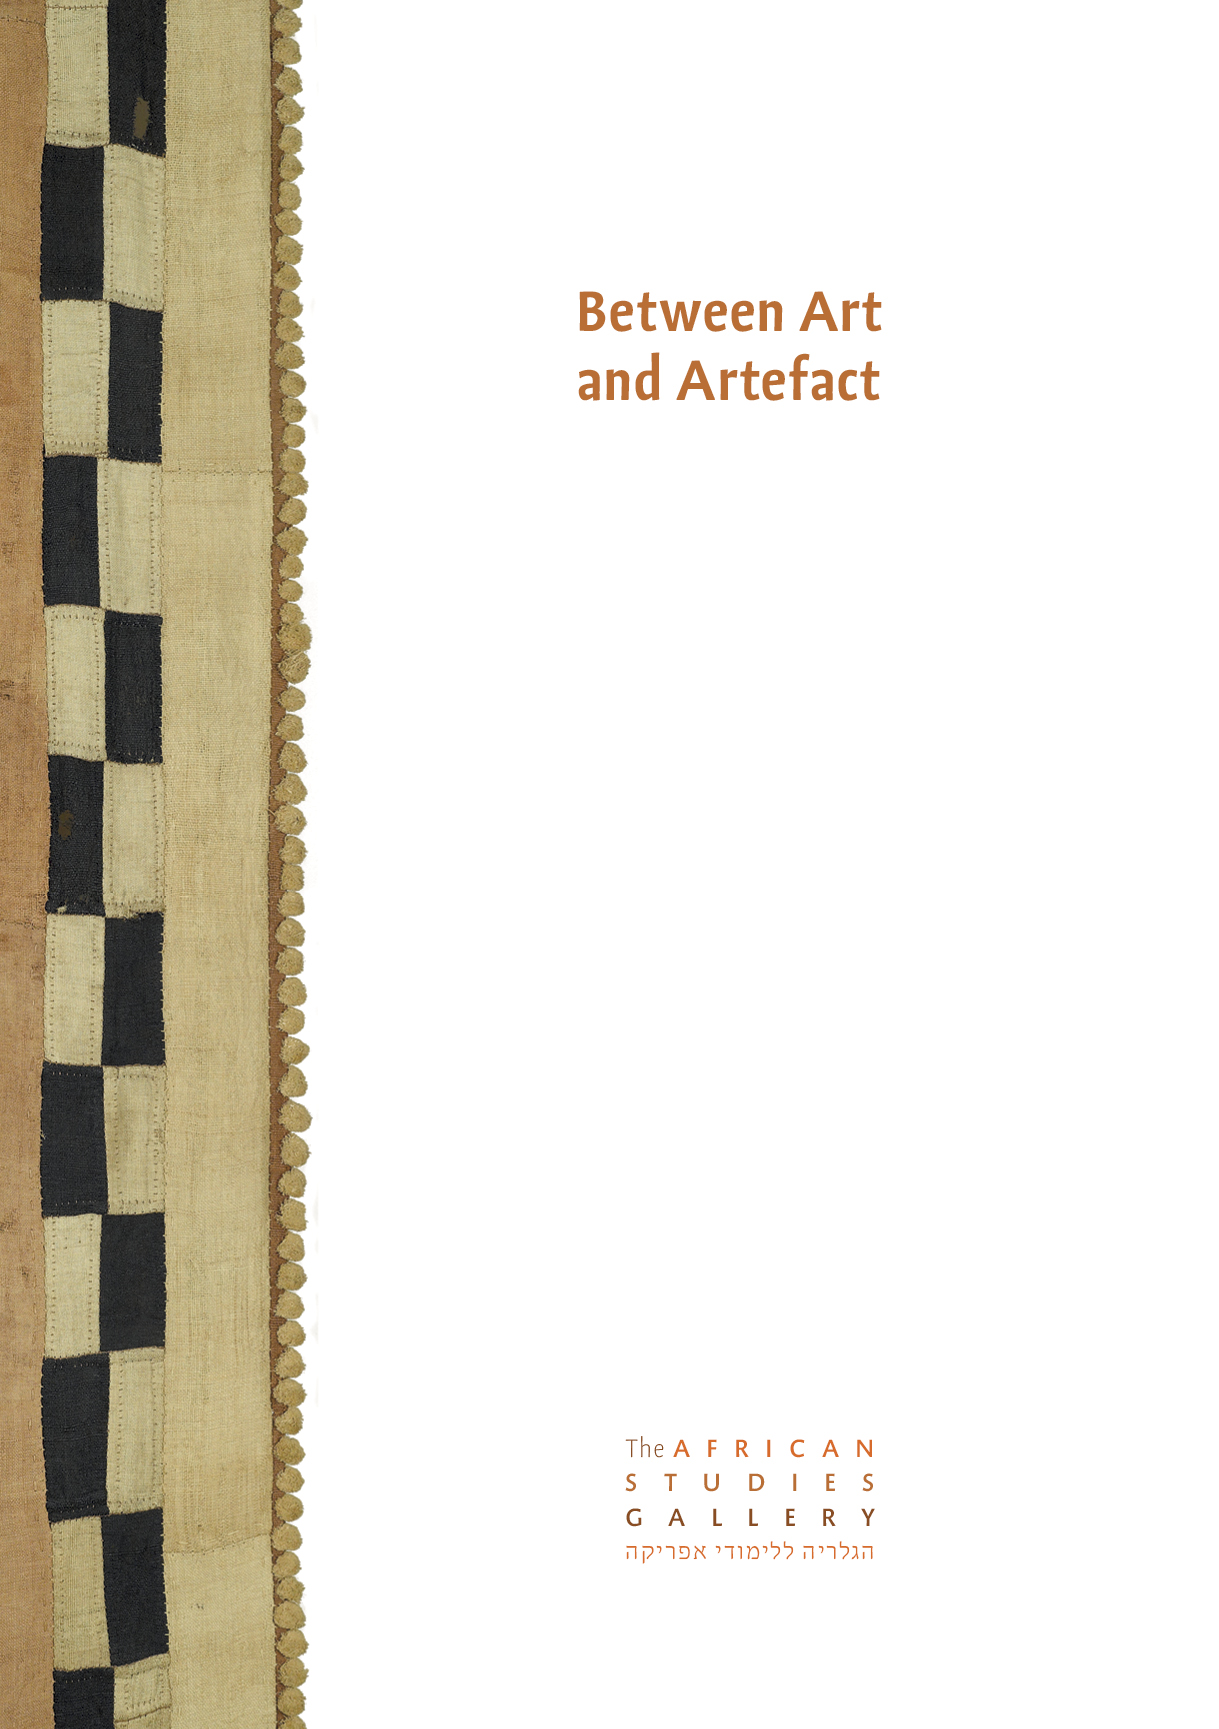 https://www.africanstudiesgallery.org/catalogues/between-art-and-artefact.pdf